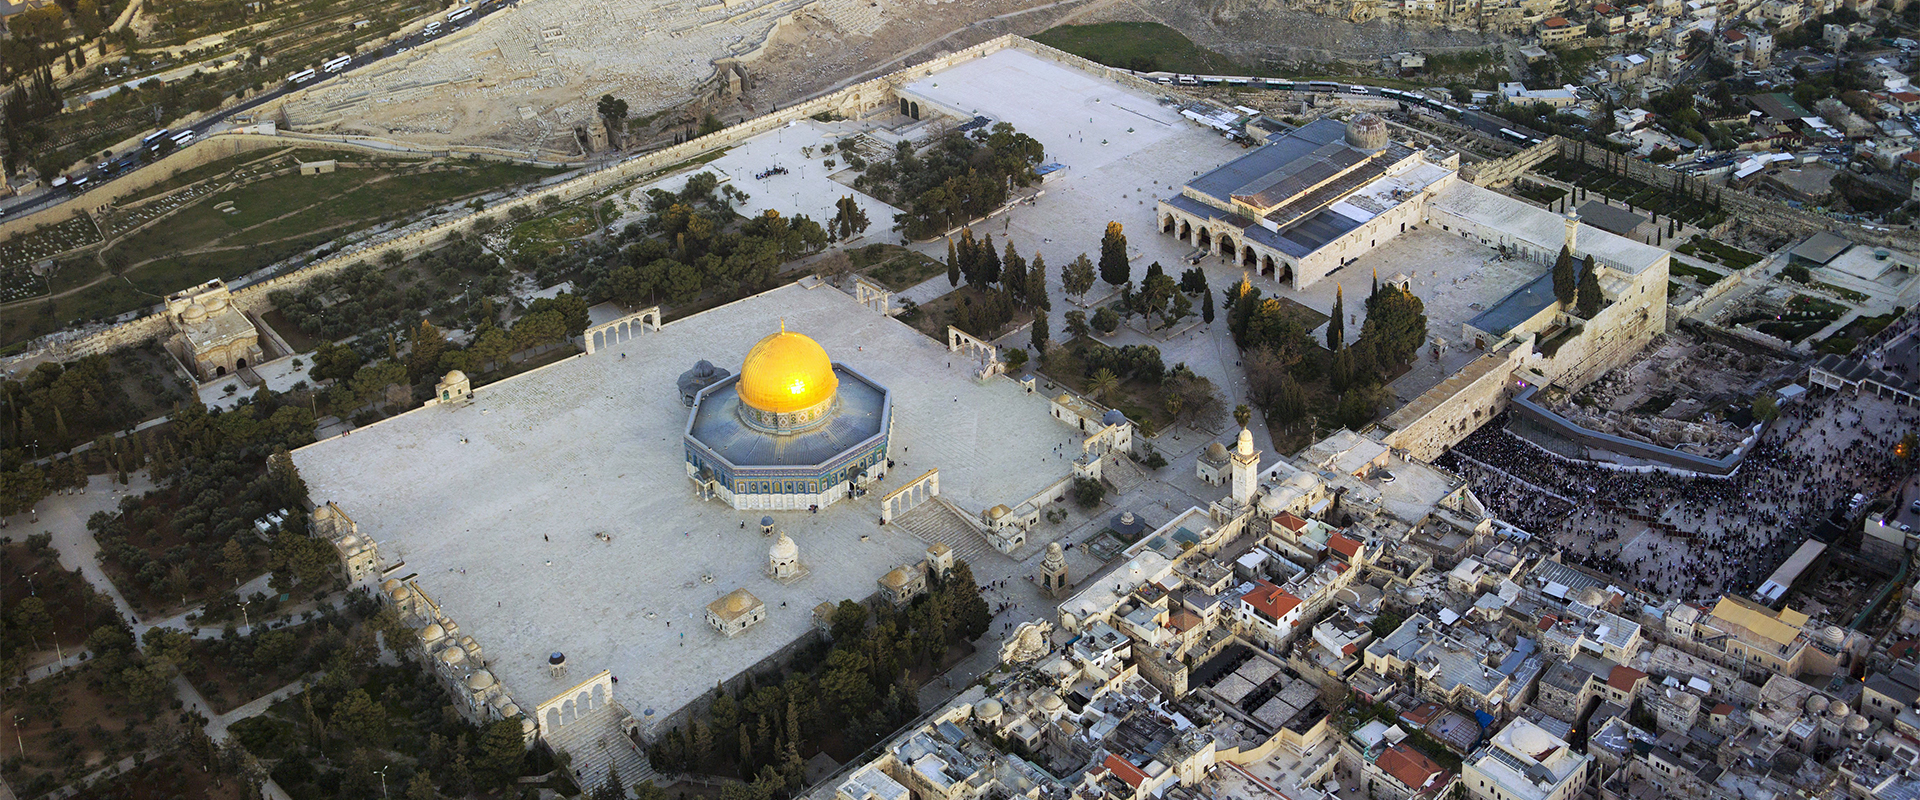 What is Masjid Al-Aqsa?